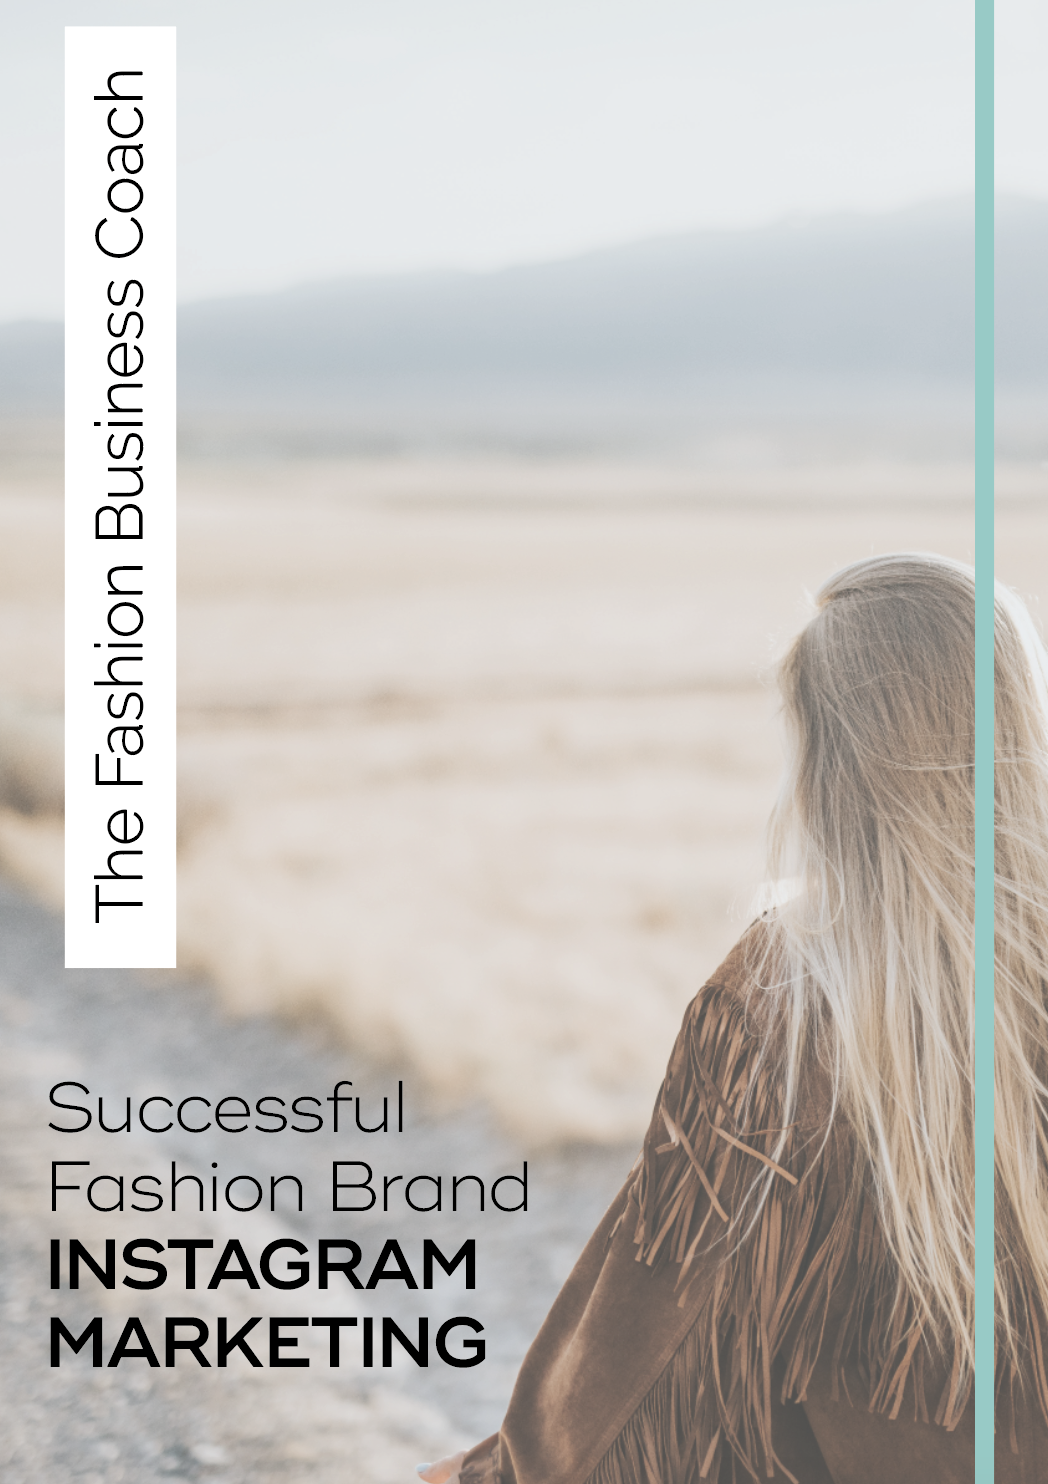 Instagram Marketing – Successful Fashion Brand 2.png